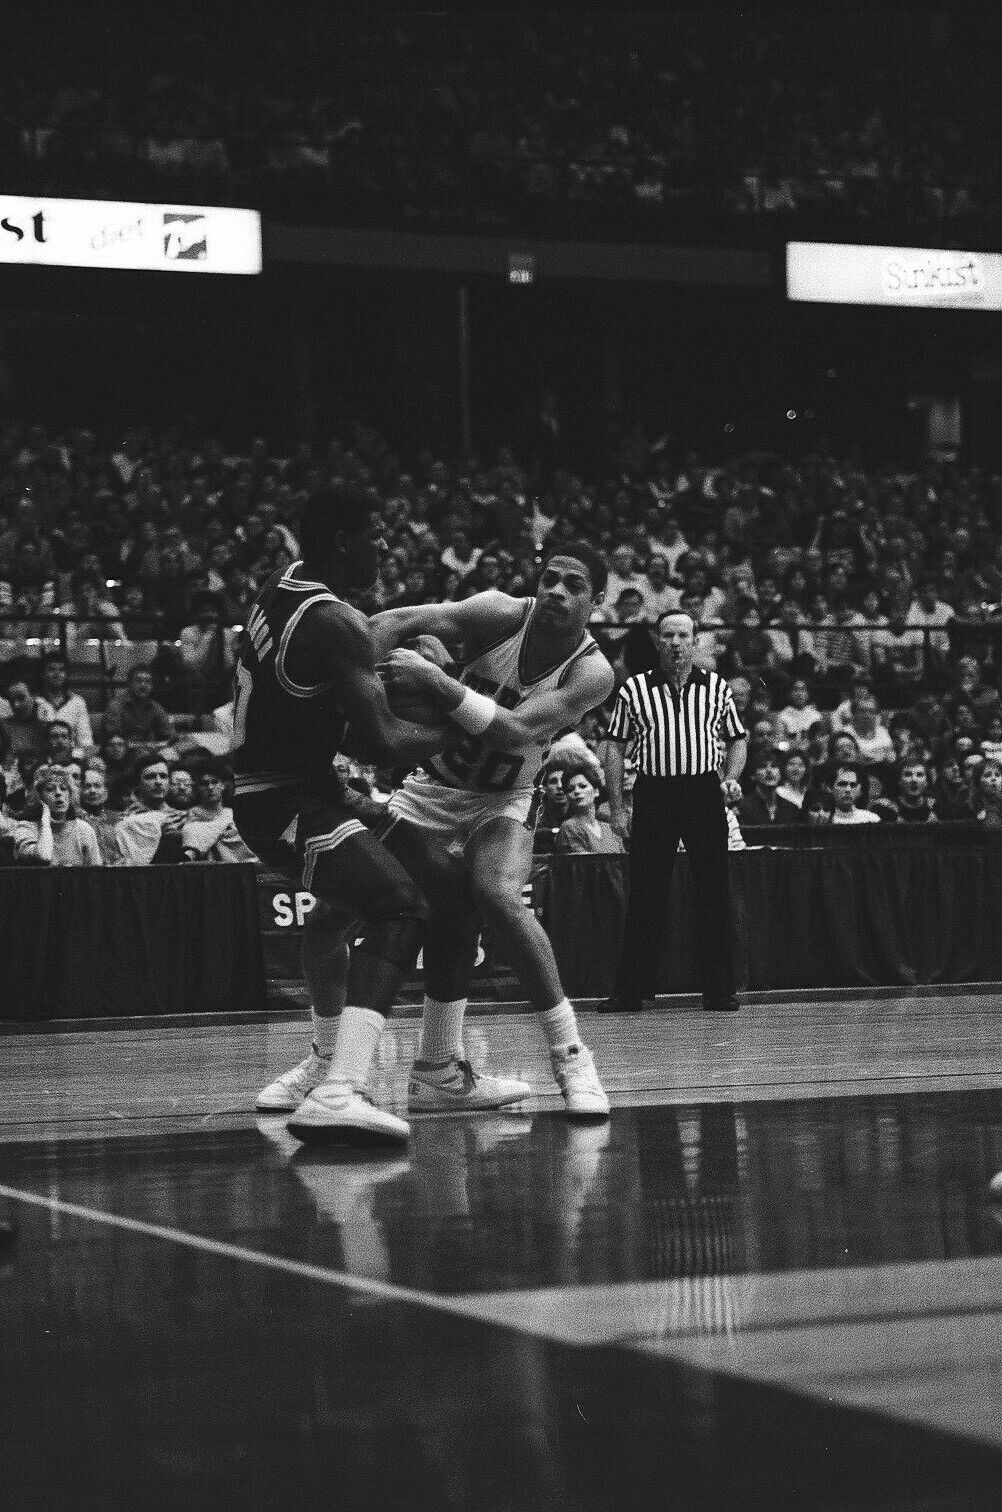 LD125-46 1986 College Basketball DePaul UAB Blazers (55) ORIG 35mm B&W NEGATIVES Без бренда - фотография #4